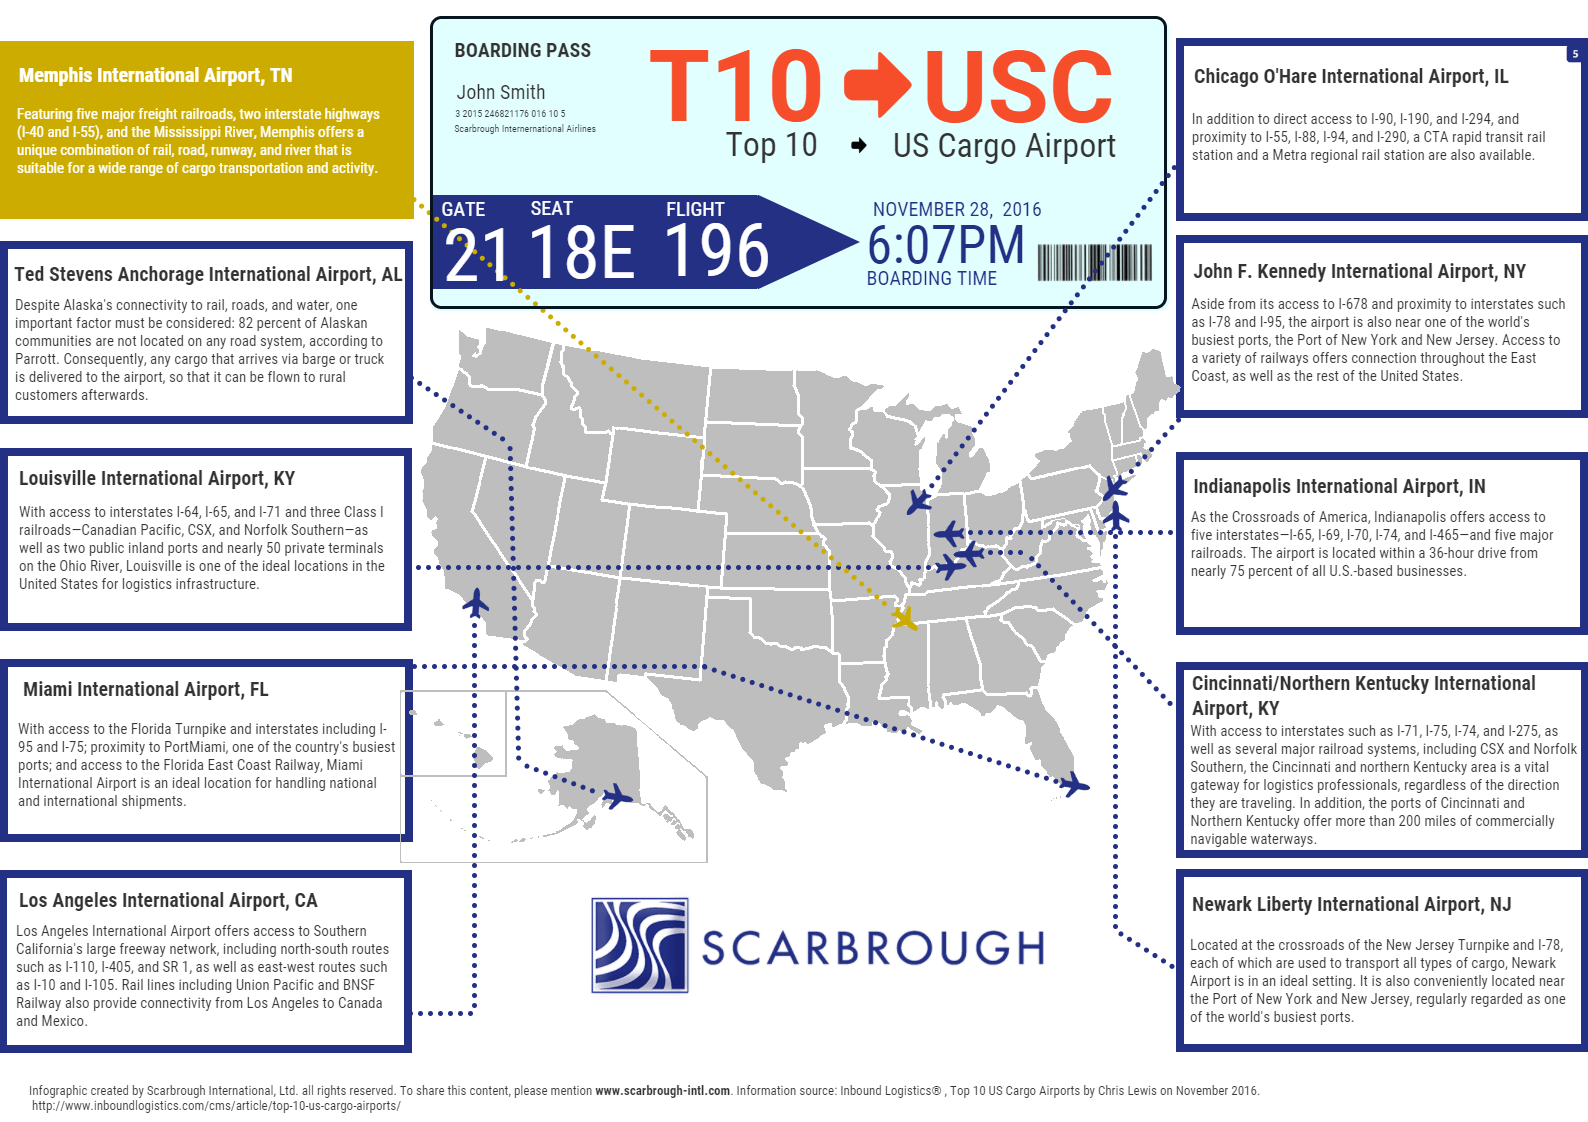 Top 10 U.S. Cargo Airports